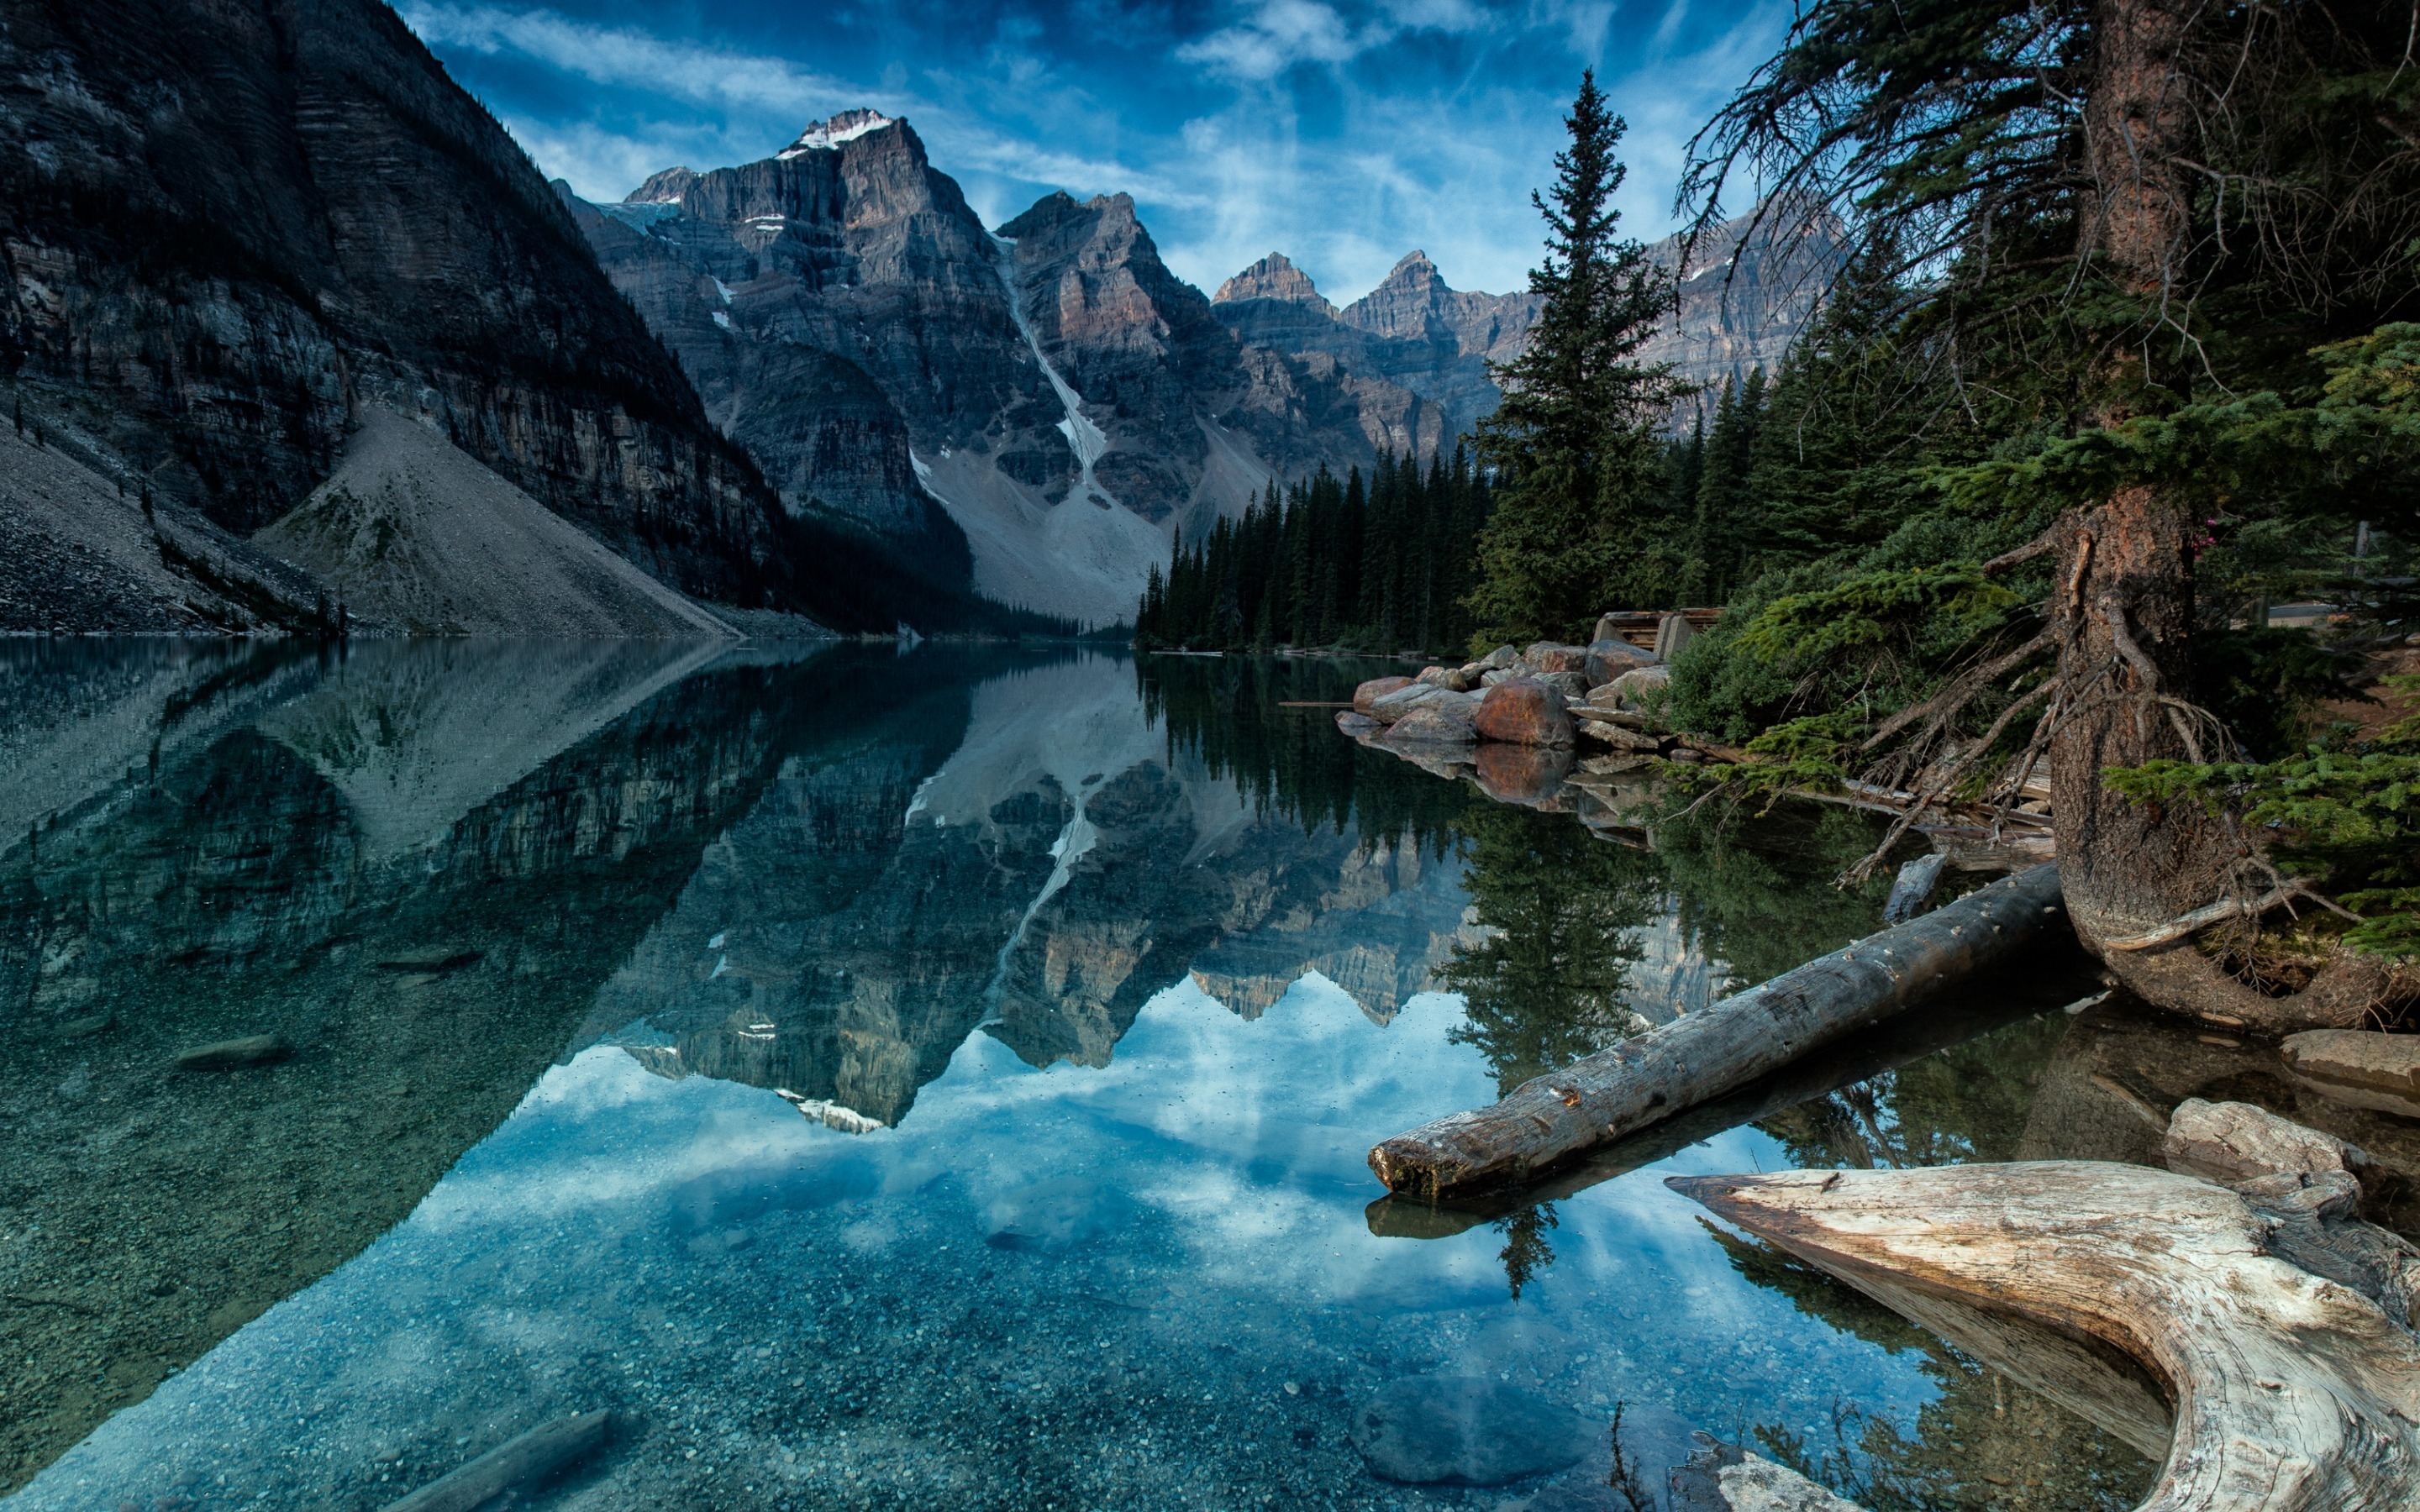 Moraine Lake Alberta Canada for 2880 x 1800 Retina Display resolution